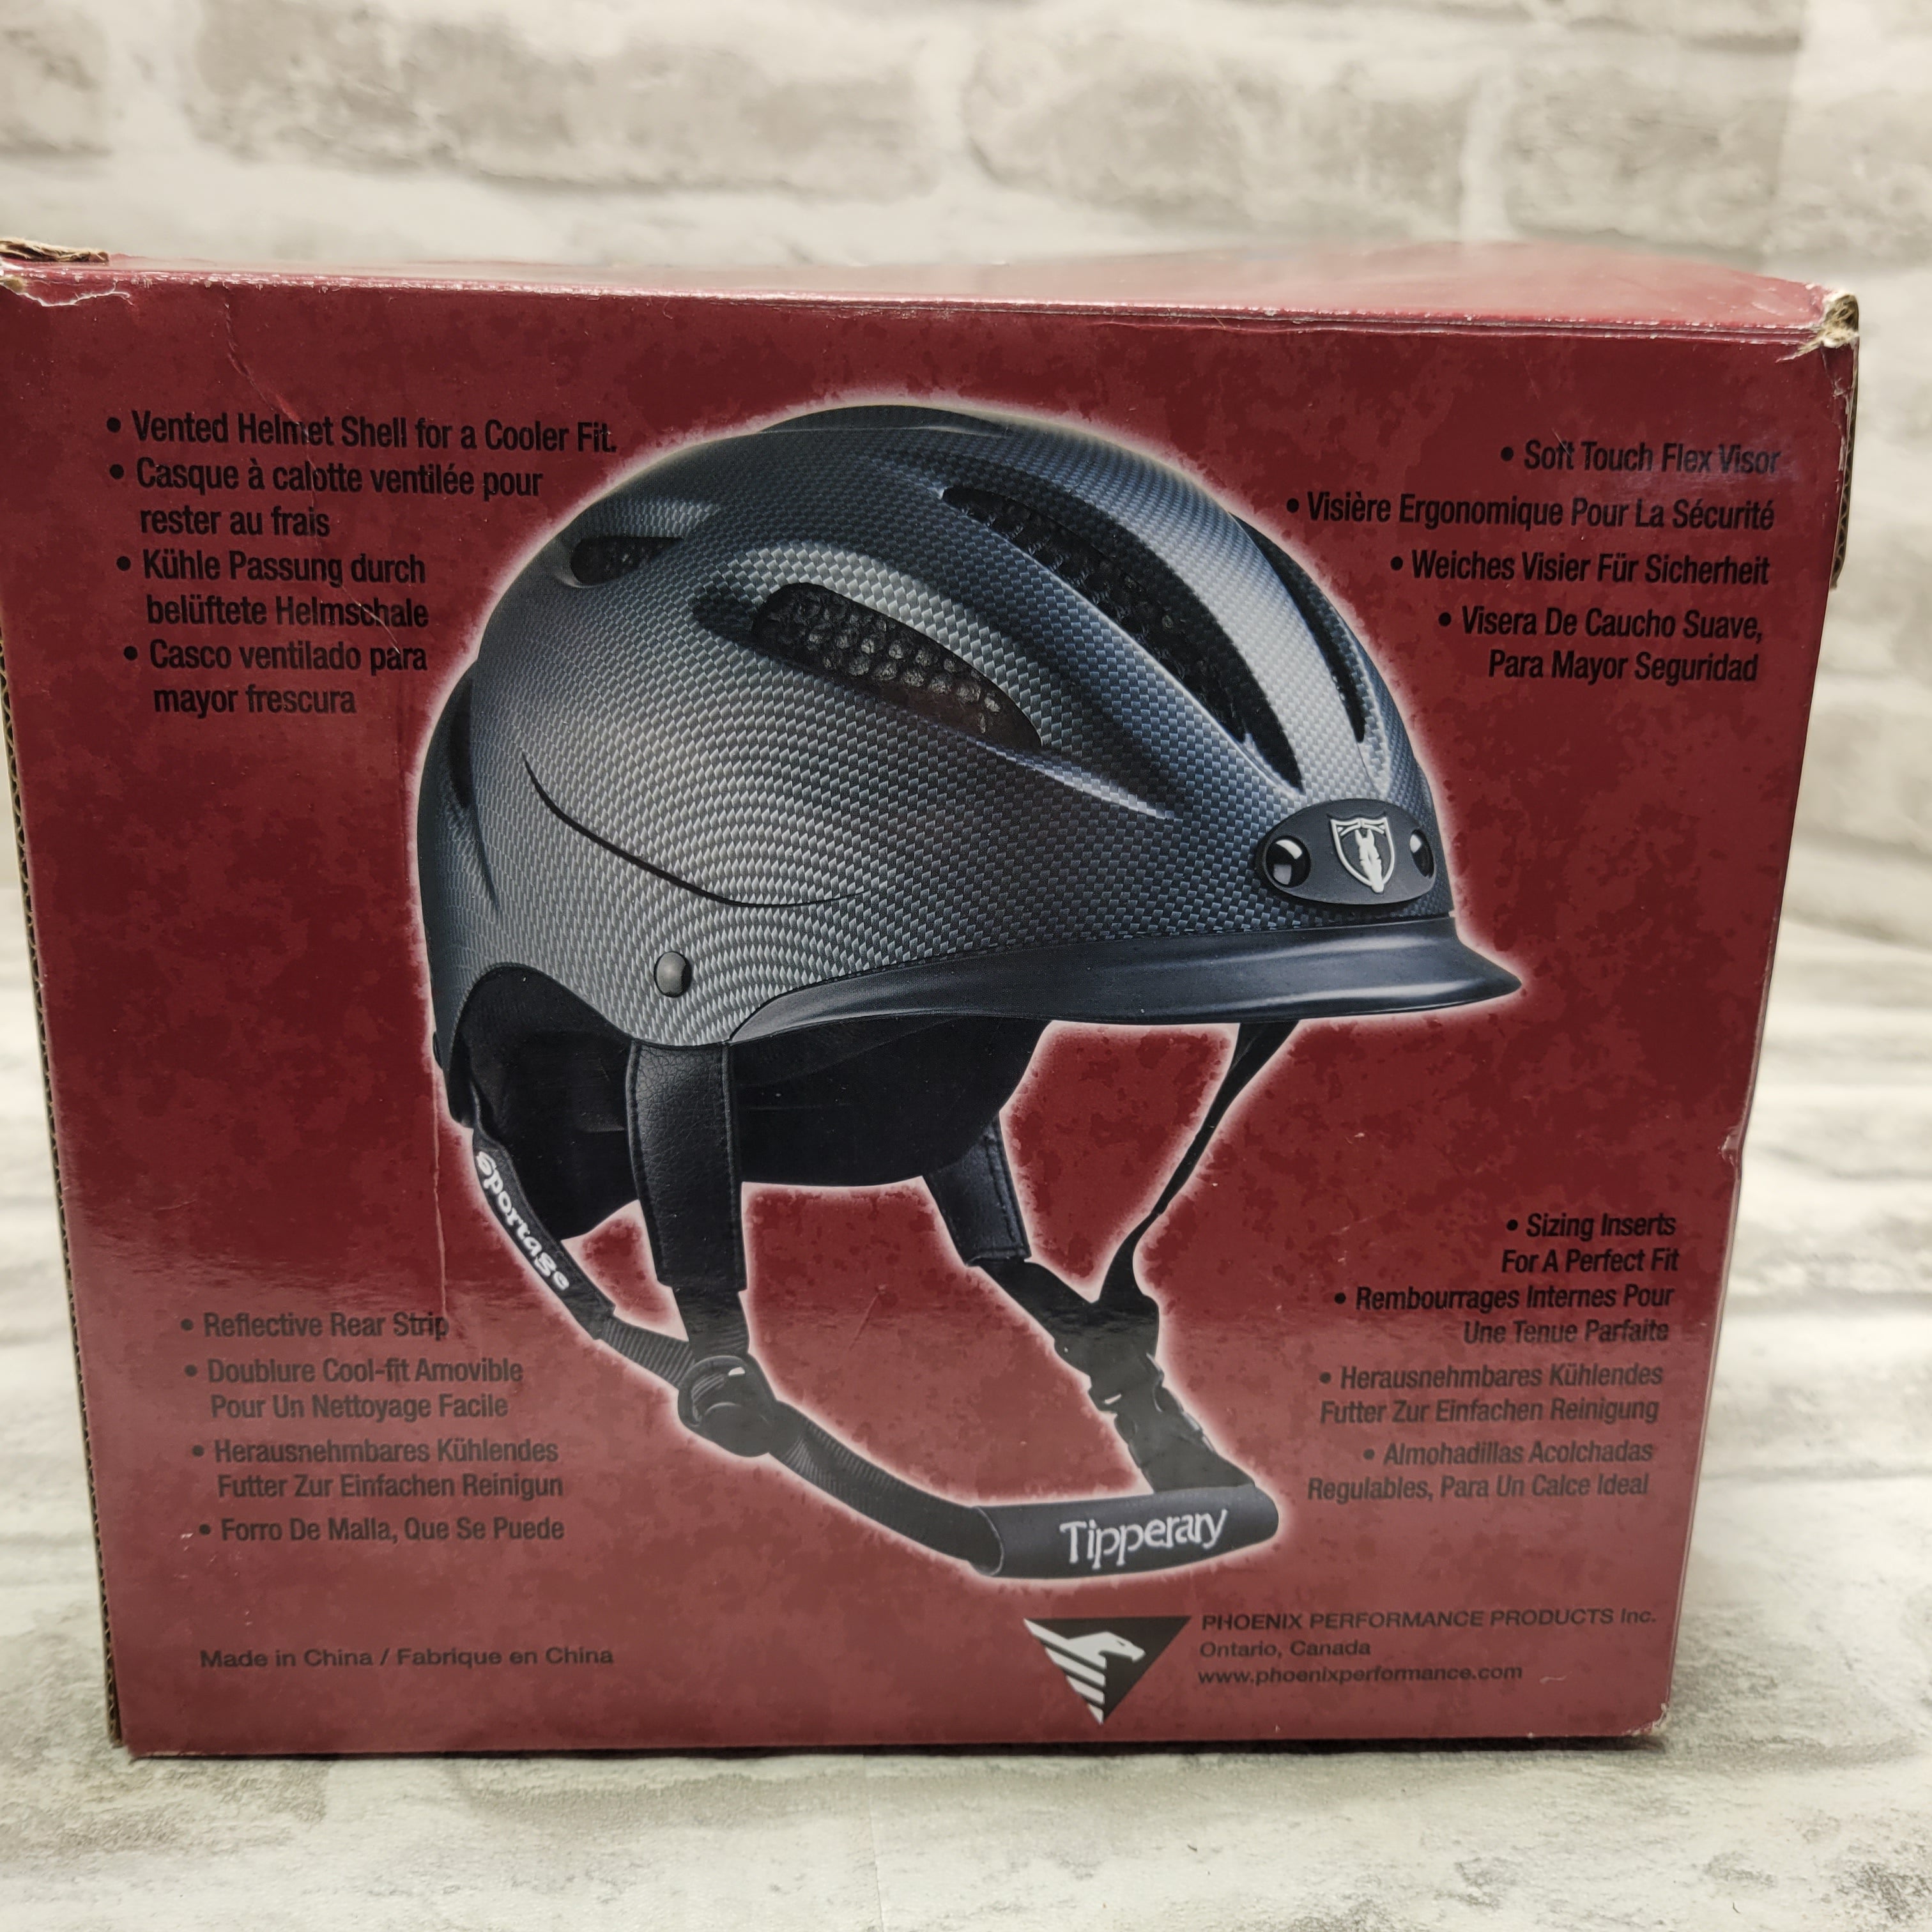 Tipperary Sportage 8500 Riding Helmet, Medium, Cocoa Brown (7578778960110)